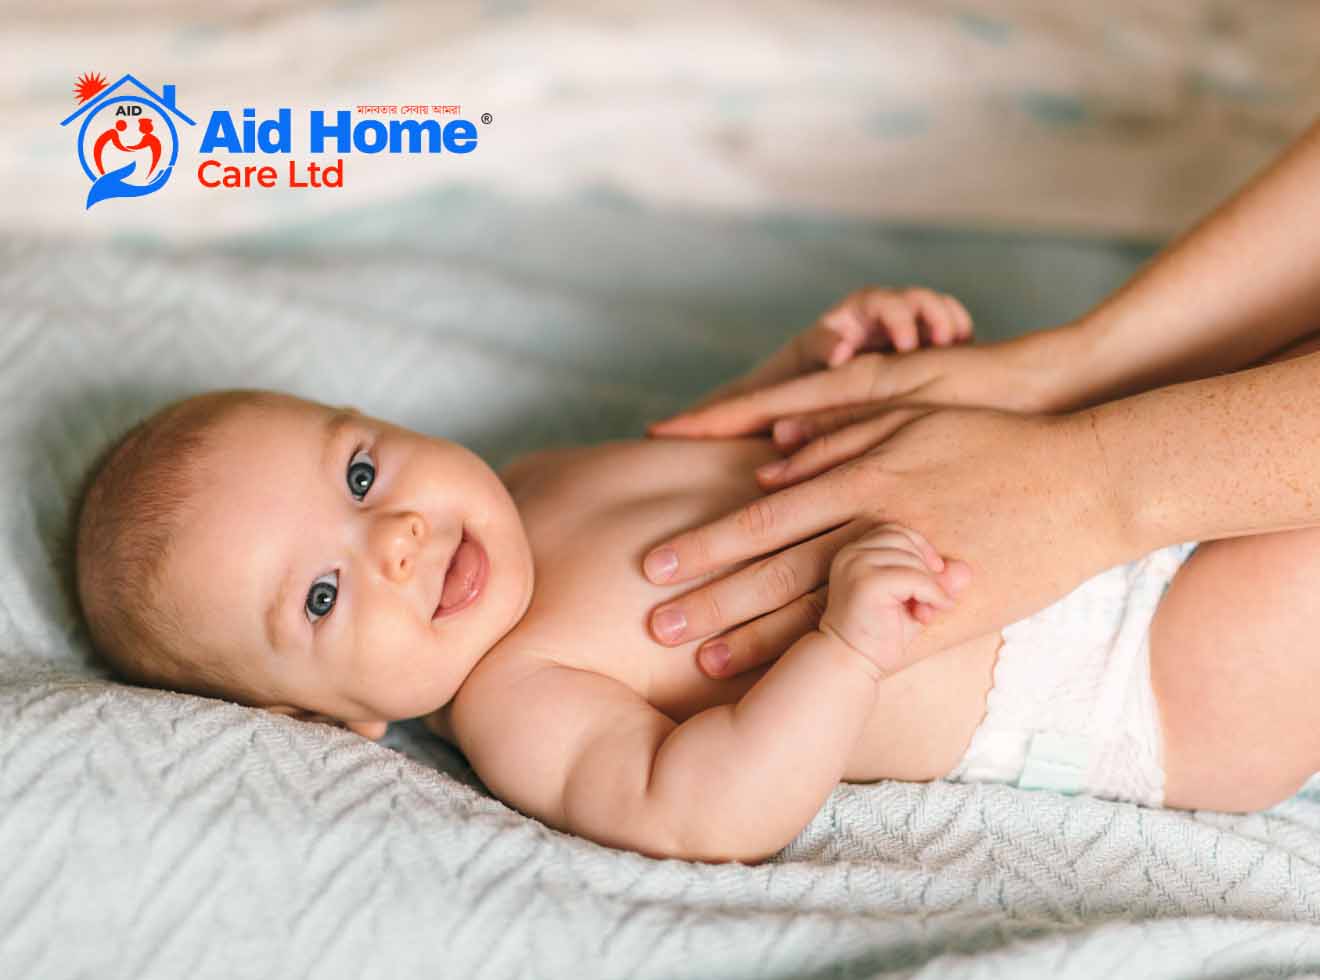 babycare Aid Home Care Ltd.